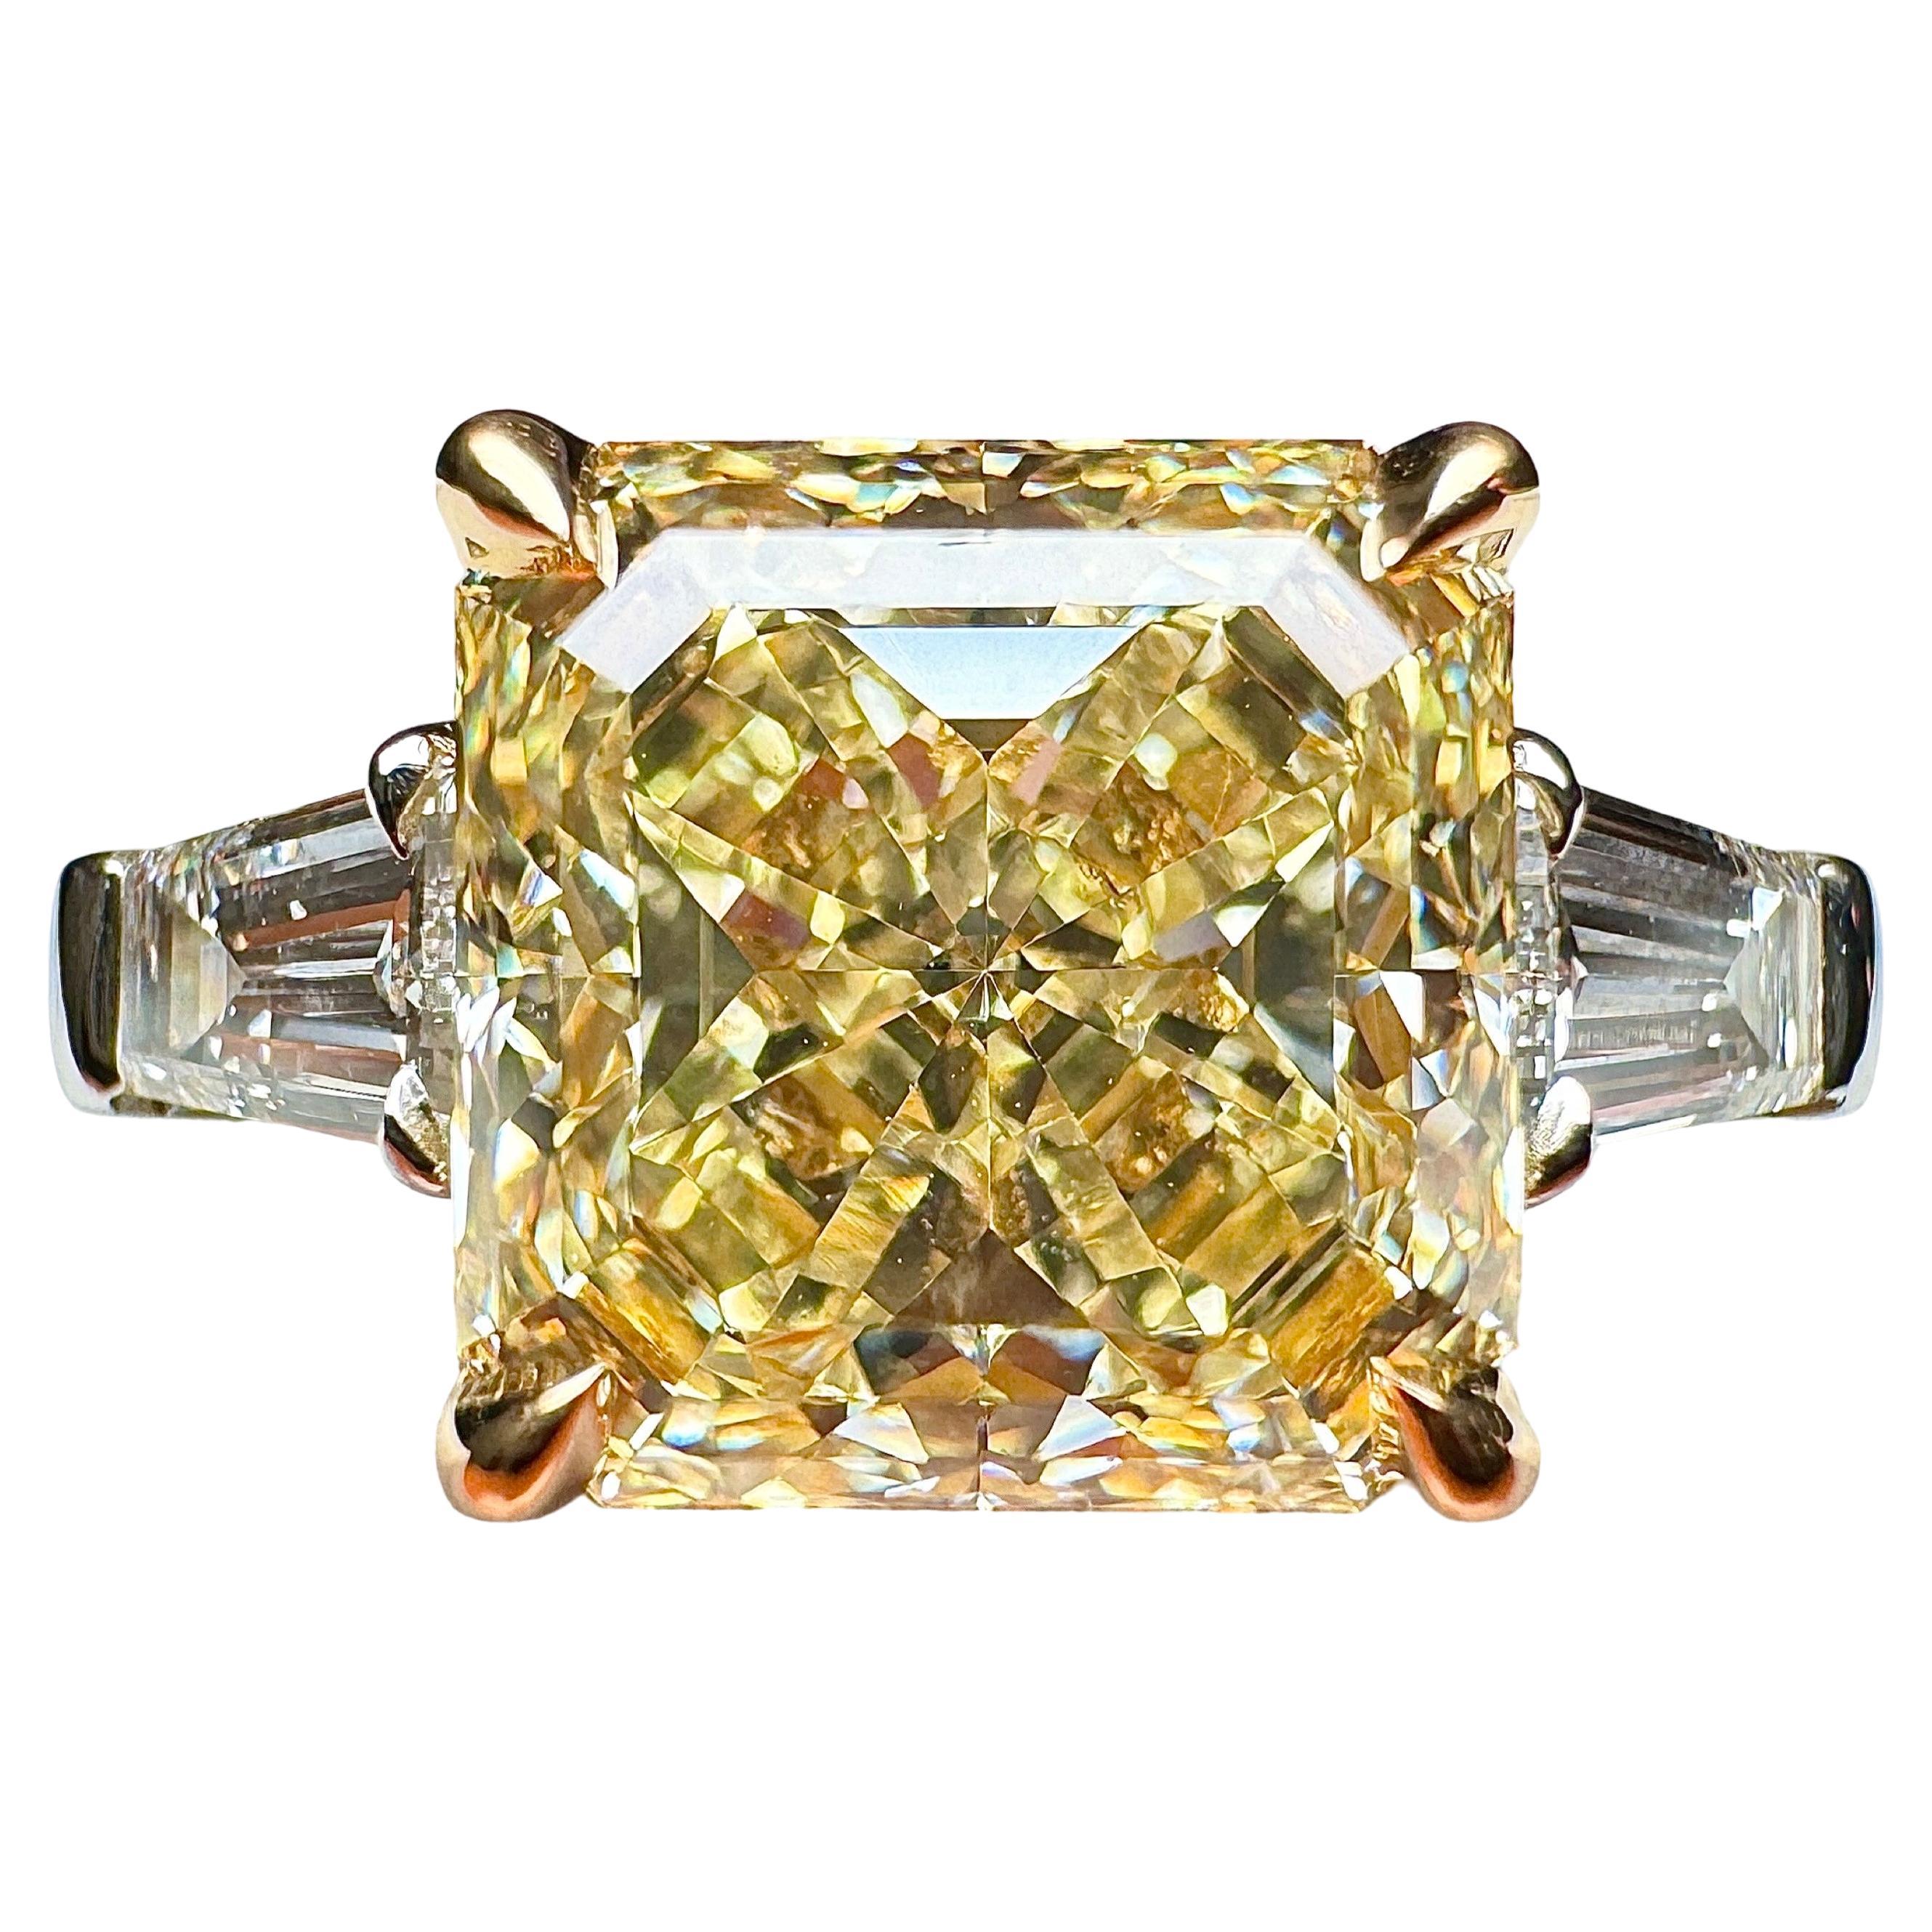 GIA Certified 3.03 Carat Radiant Cut Yellow Diamond 3 Stone Ring